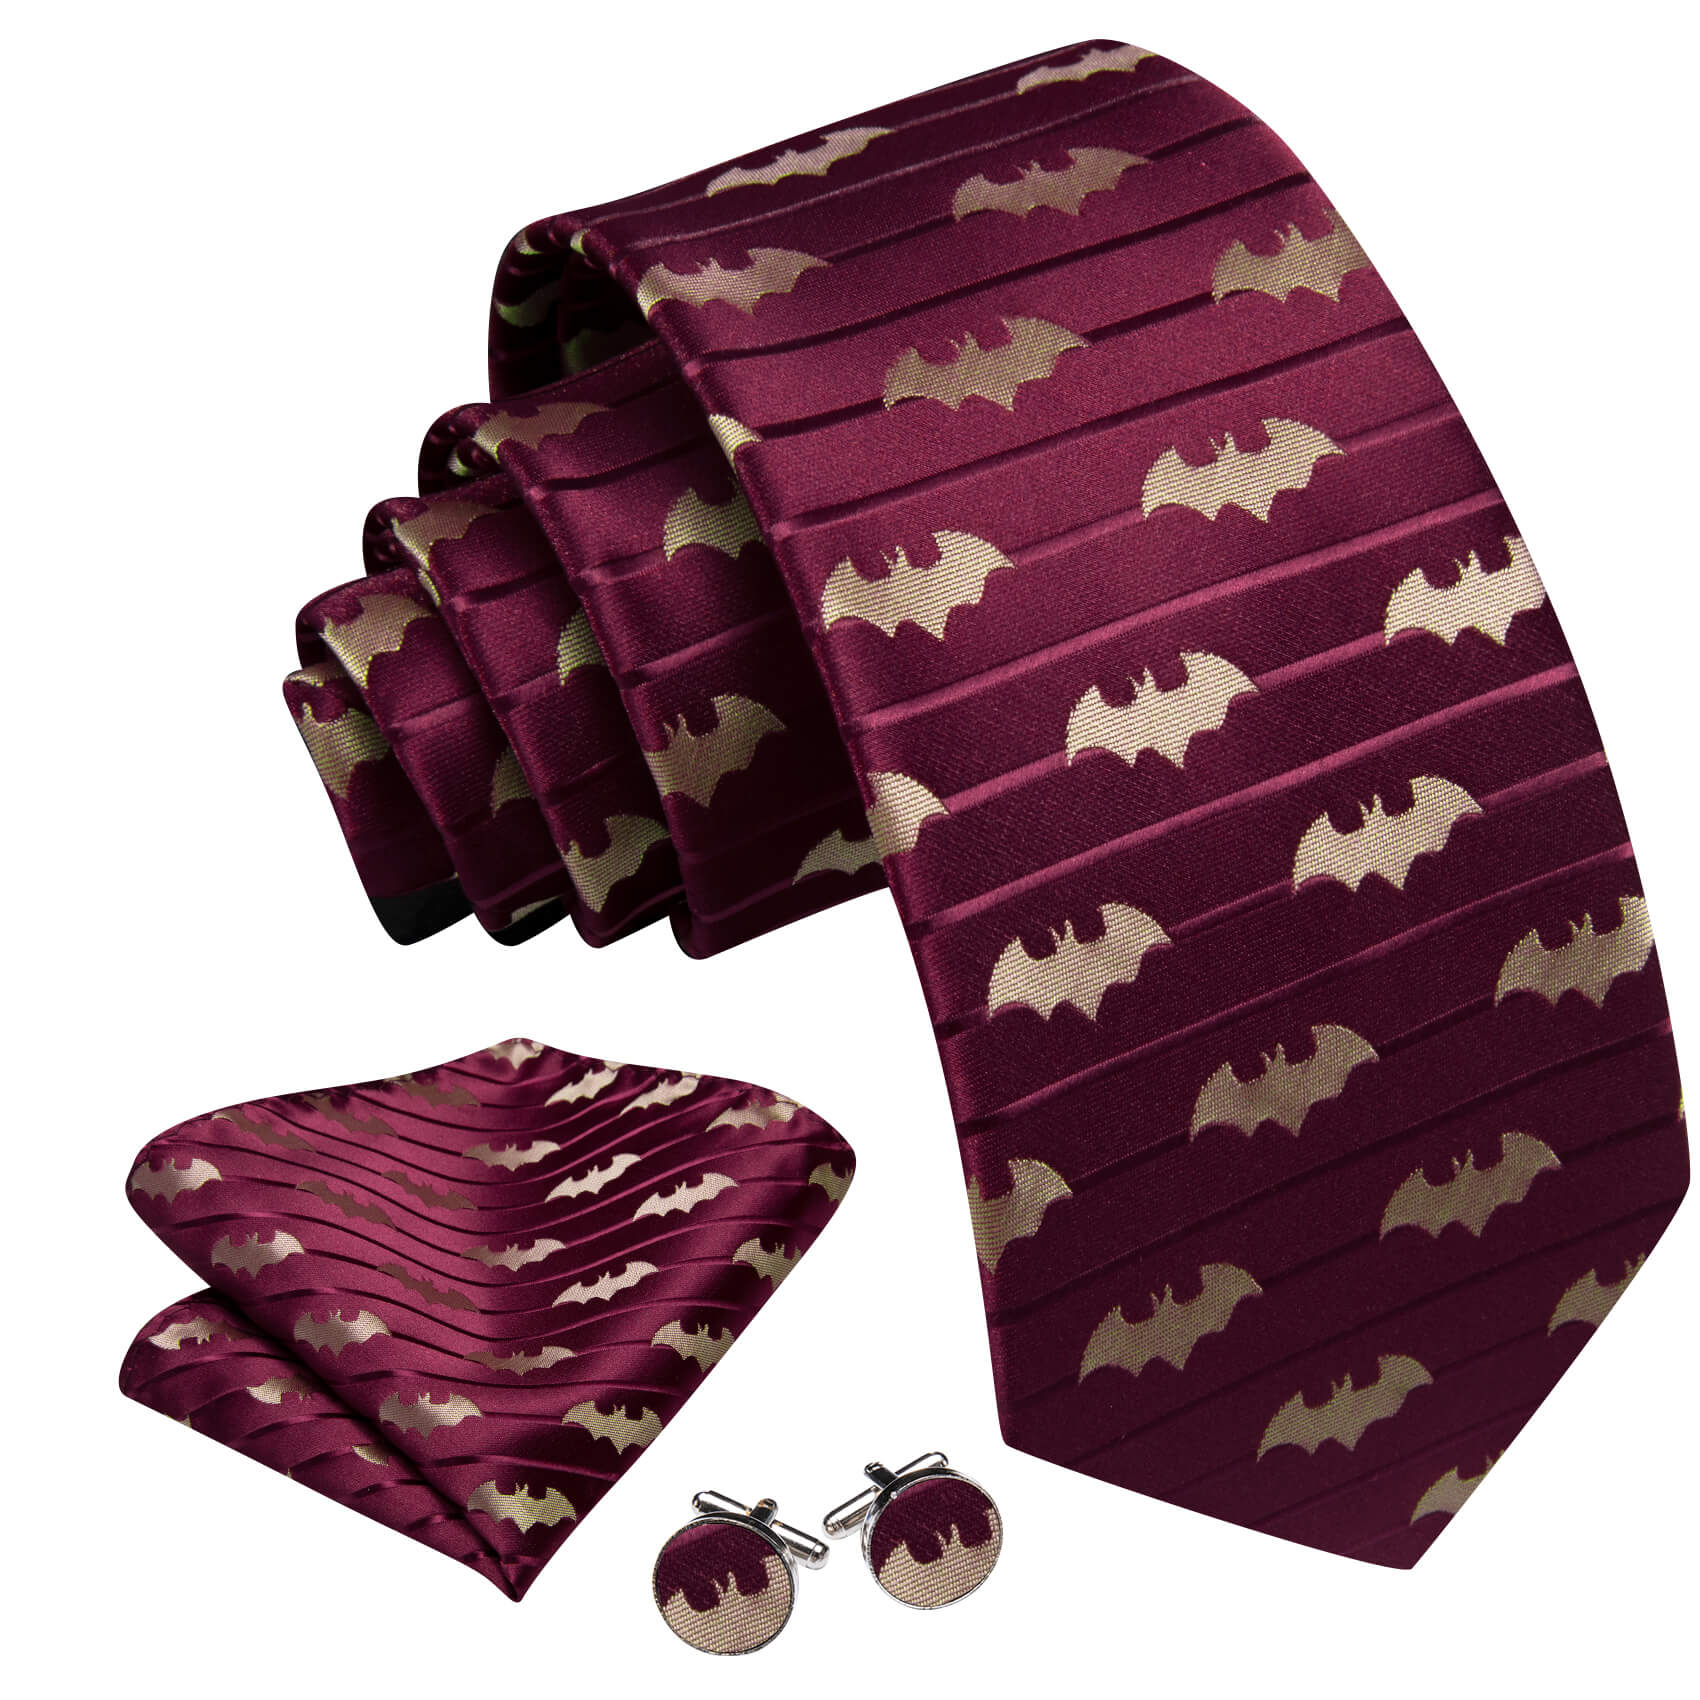 Barry.wang Red Tie Burgundy Yellow Jacquard Woven Bat Men's Silk Tie Set